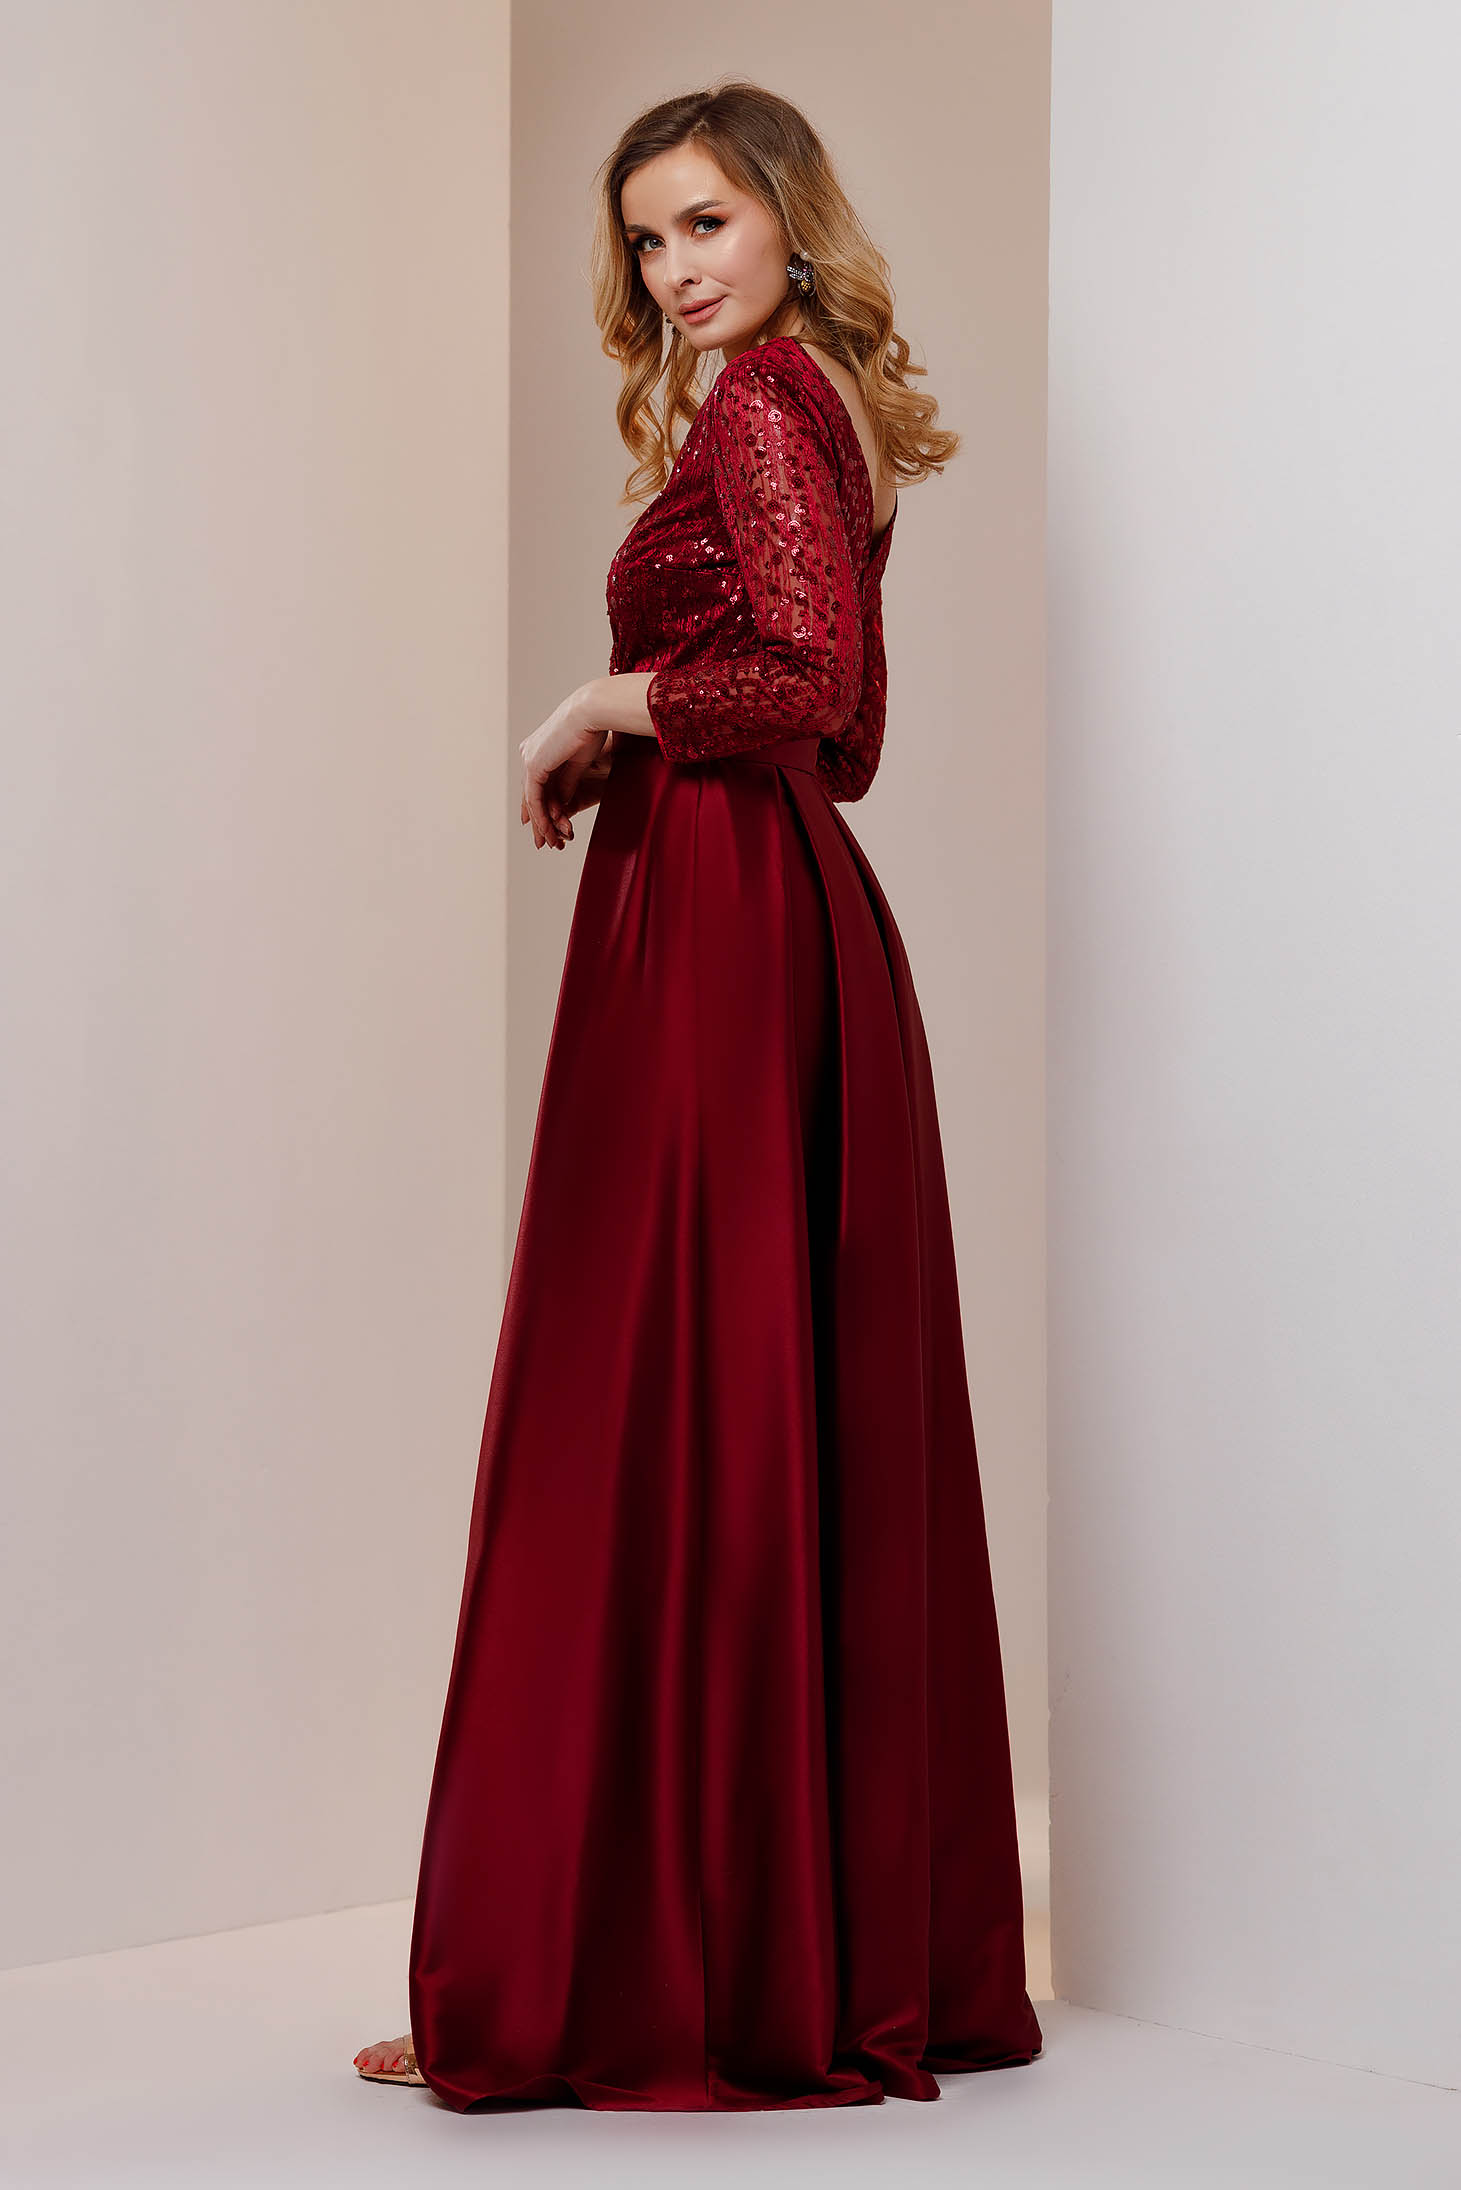 Burgundy dress long taffeta with v-neckline with sequin embellished details 2 - StarShinerS.com